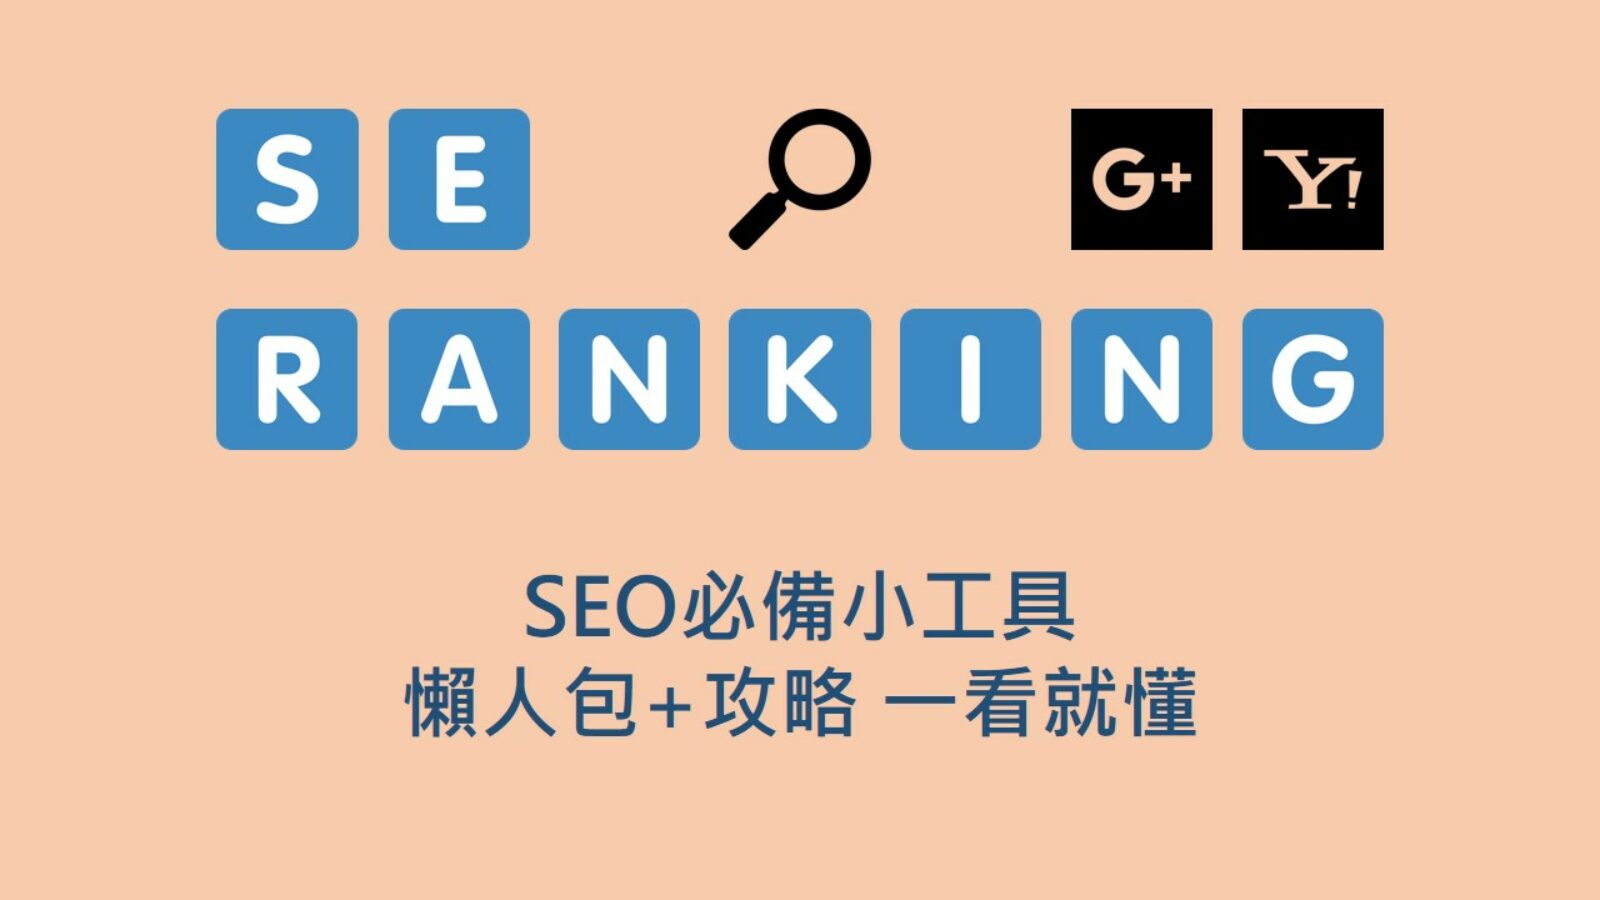 SE ranking | SEO必備小工具 使用懶人包全攻略